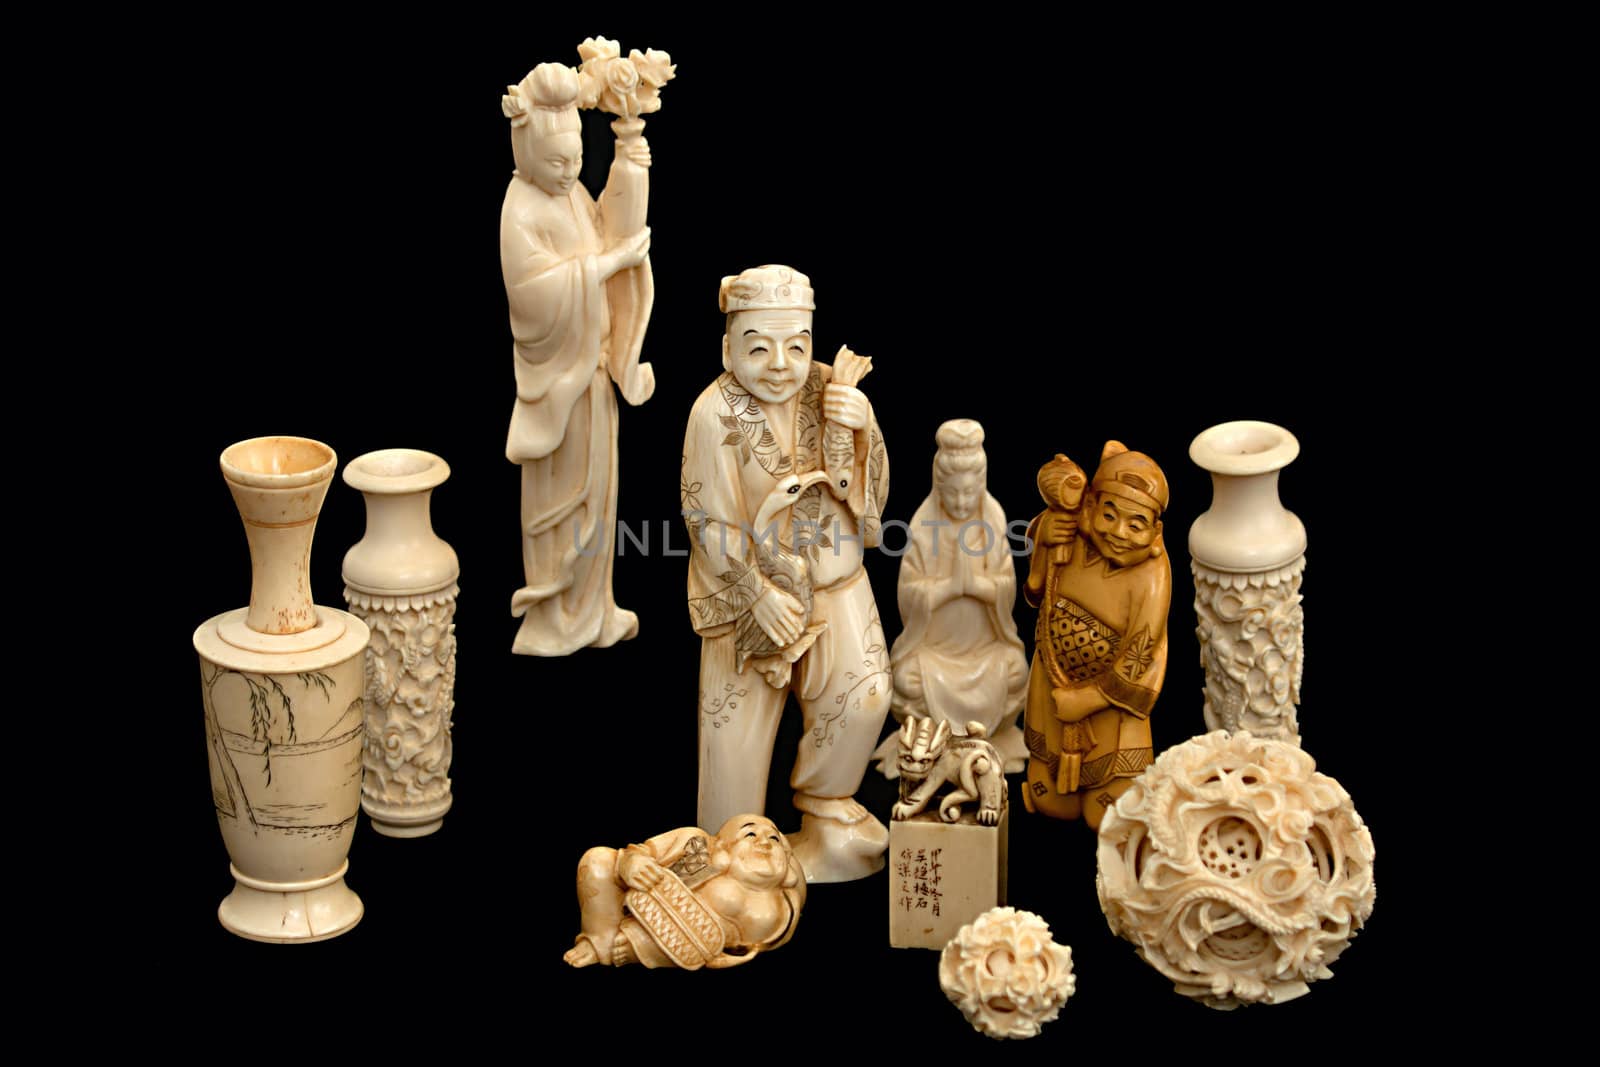 Ivory figurine china japan by GunterNezhoda